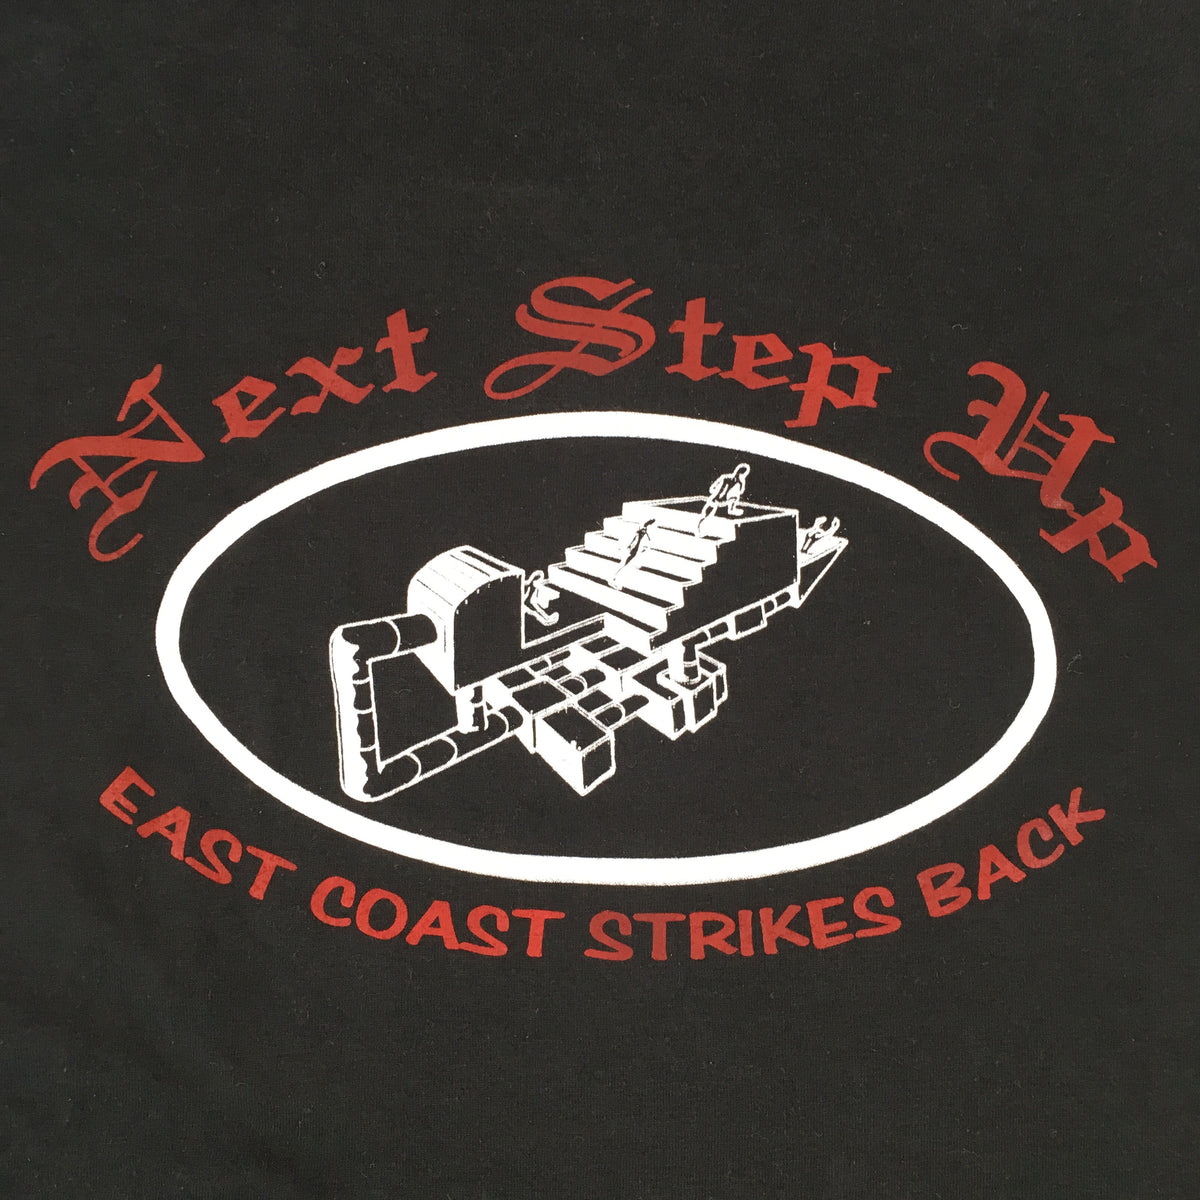 Vintage Next Step Up &quot;East Coast Strikes Back&quot; T-Shirt - jointcustodydc